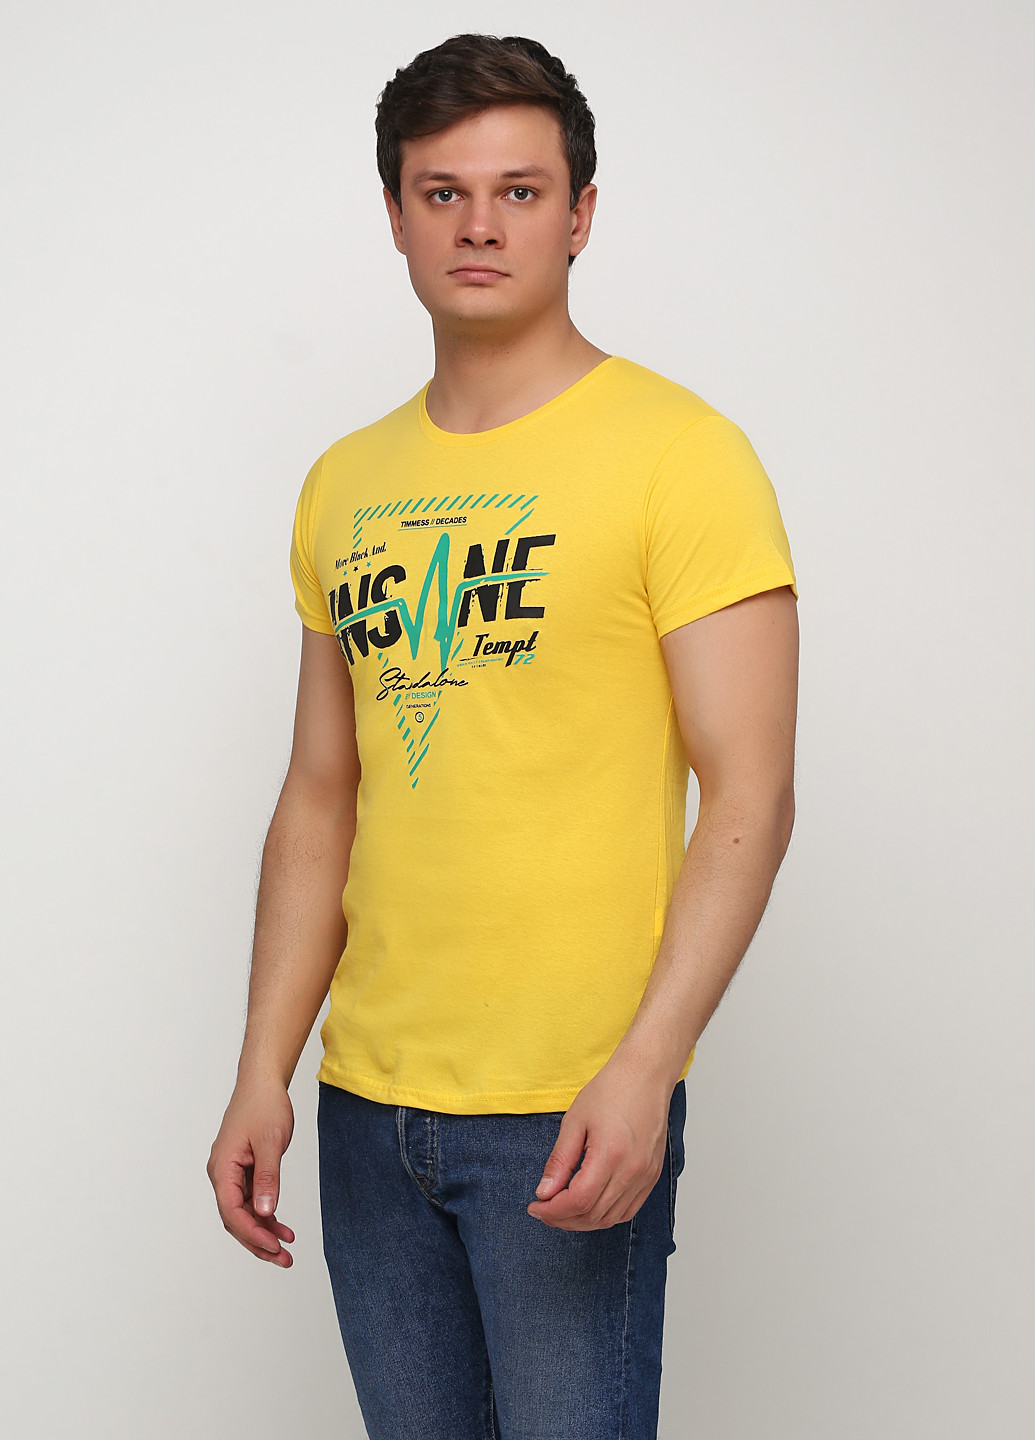 Желтая футболка By strongman